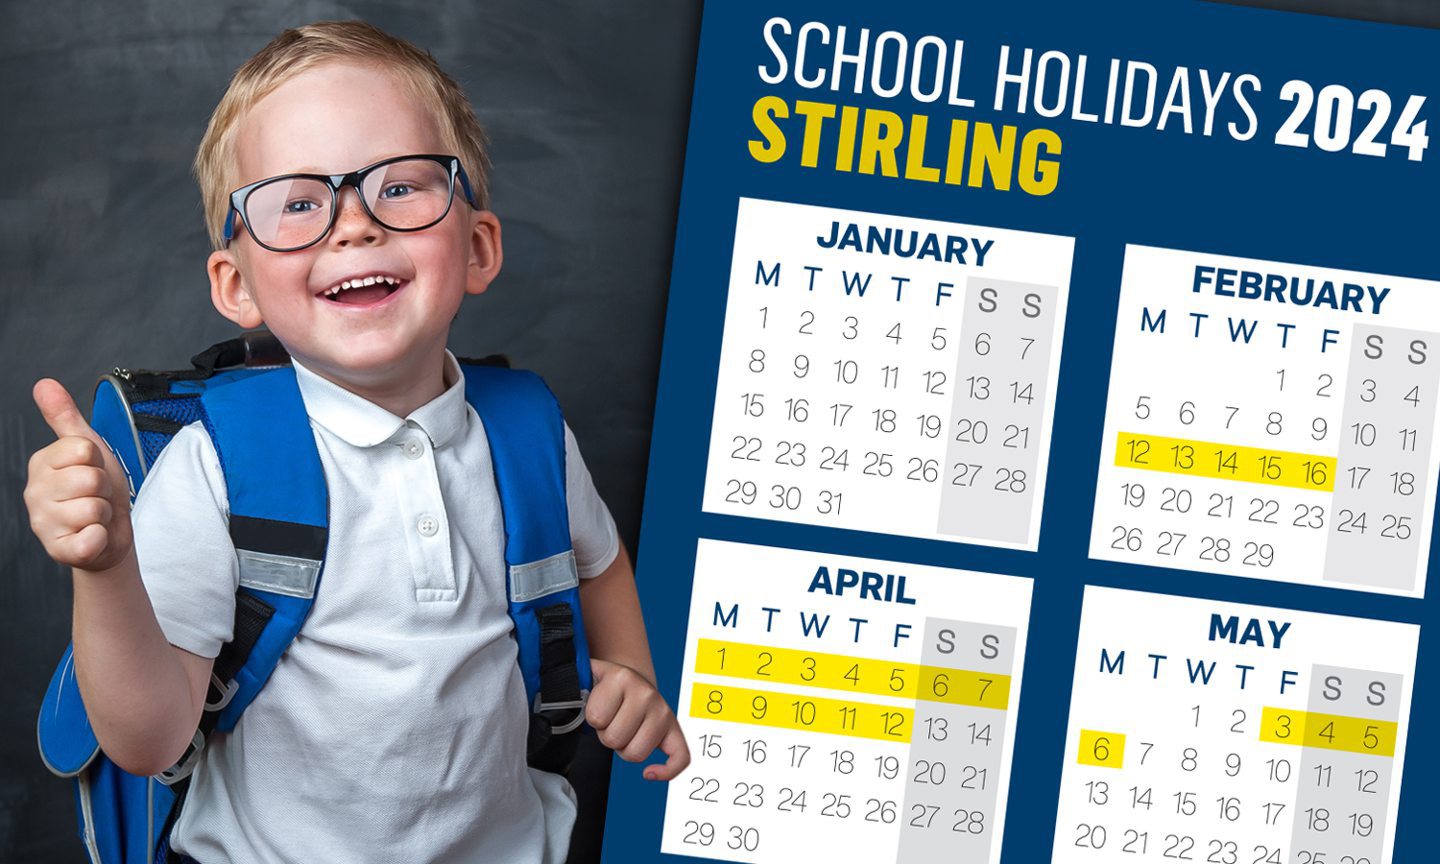 Stirling school holidays 2024 with printerfriendly calendars